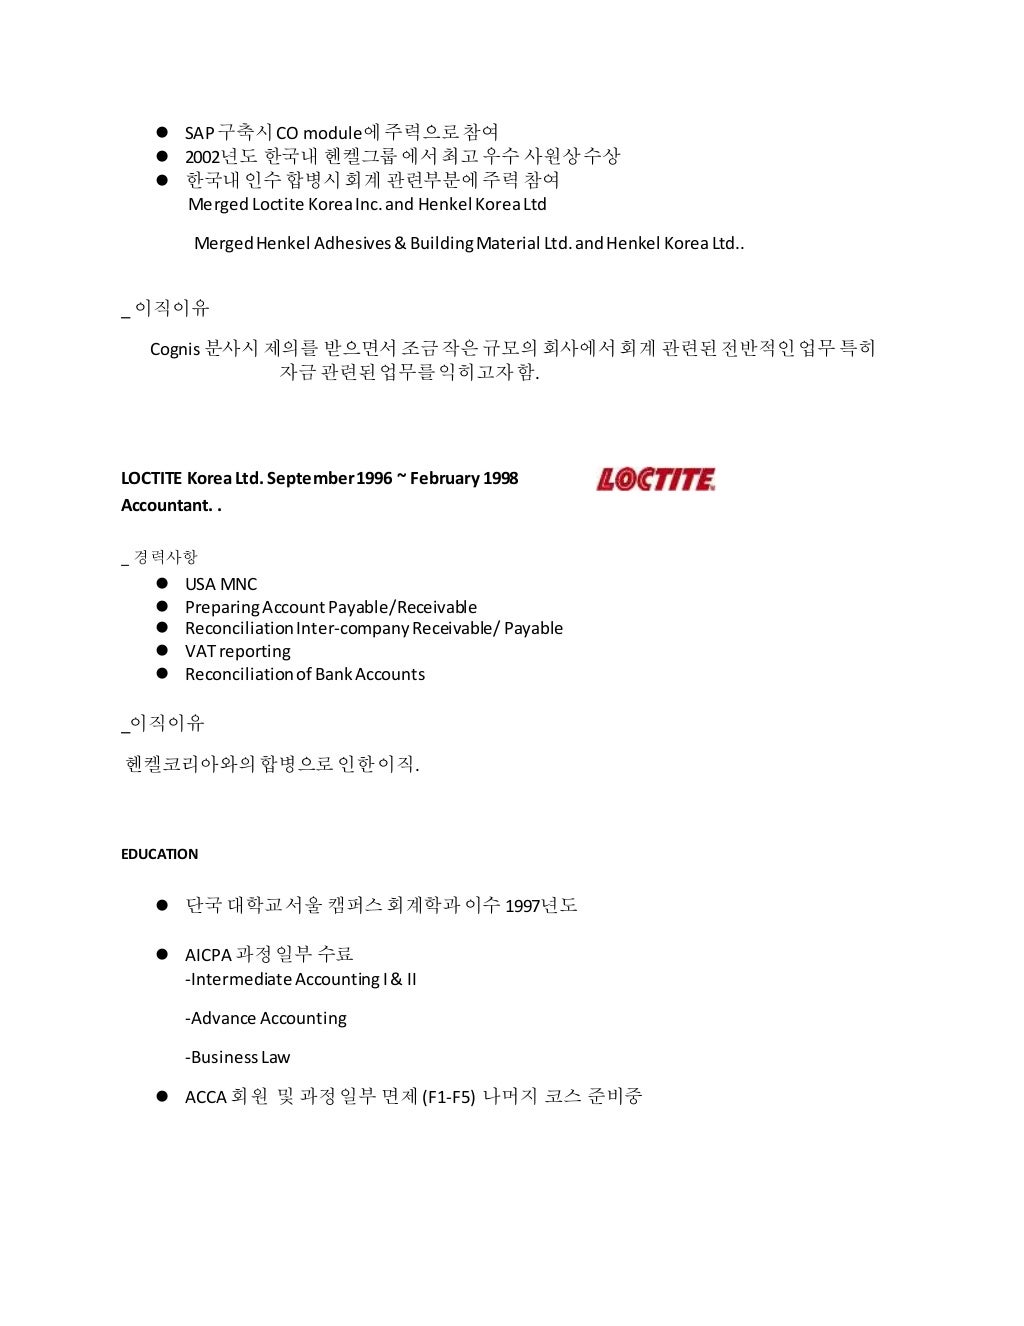 Cover letter & Resume_English & Korean_김선아